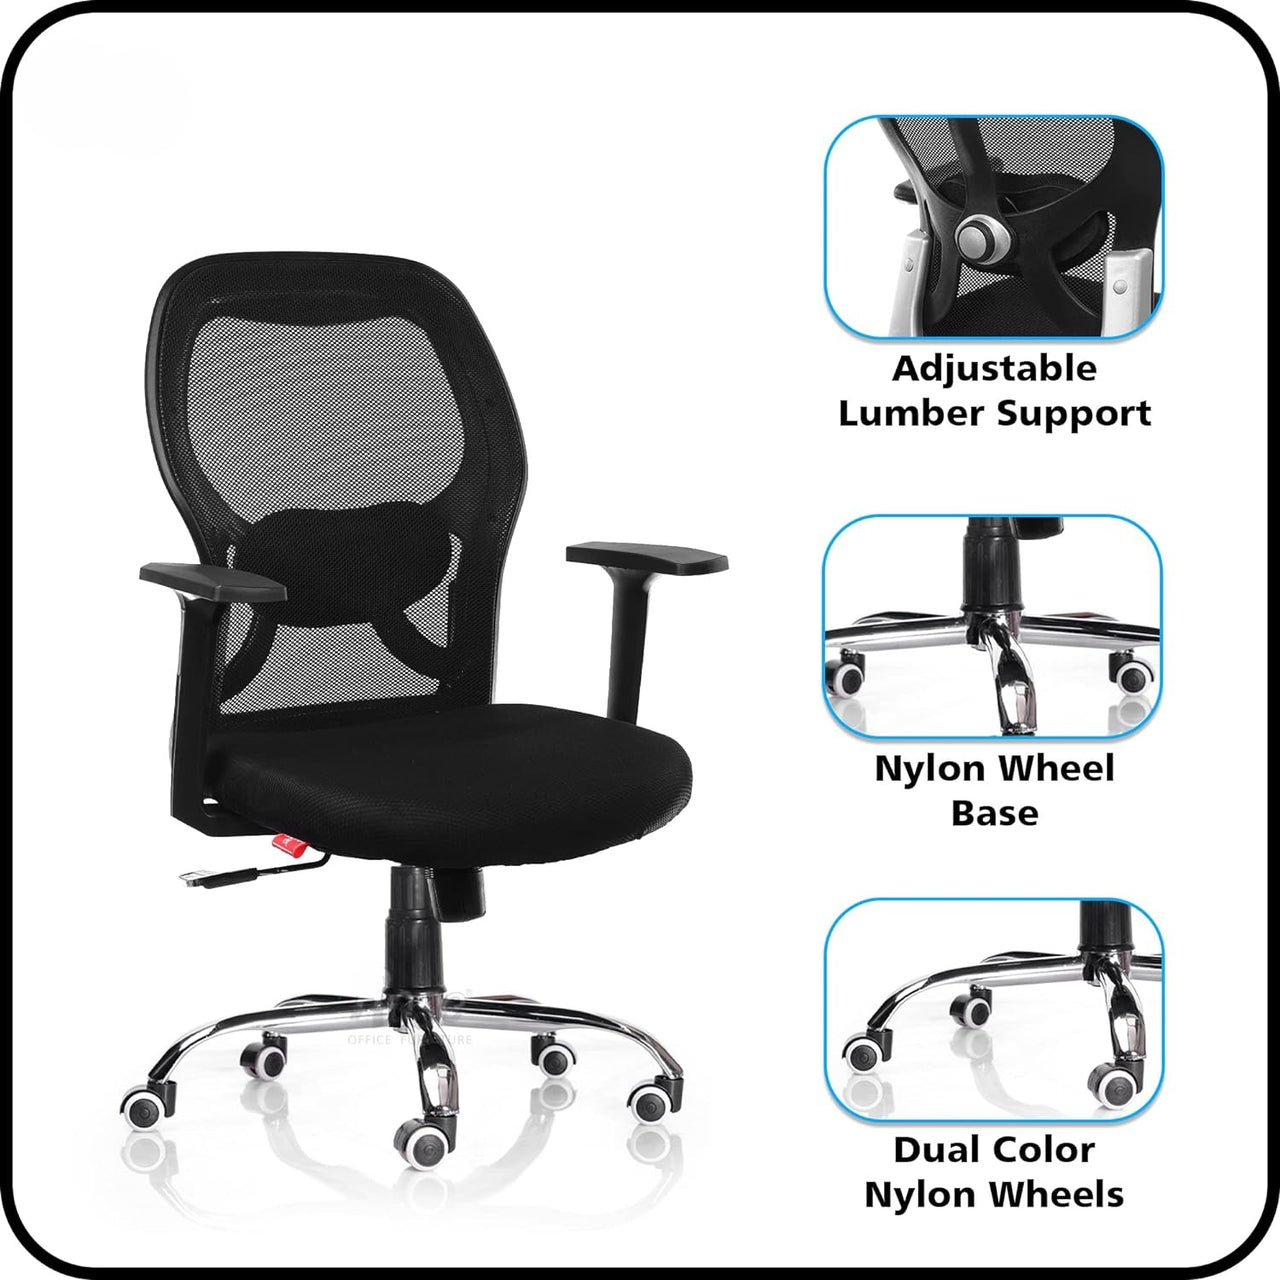 Platinum Mesh Office Chair (Black, Mid Back)